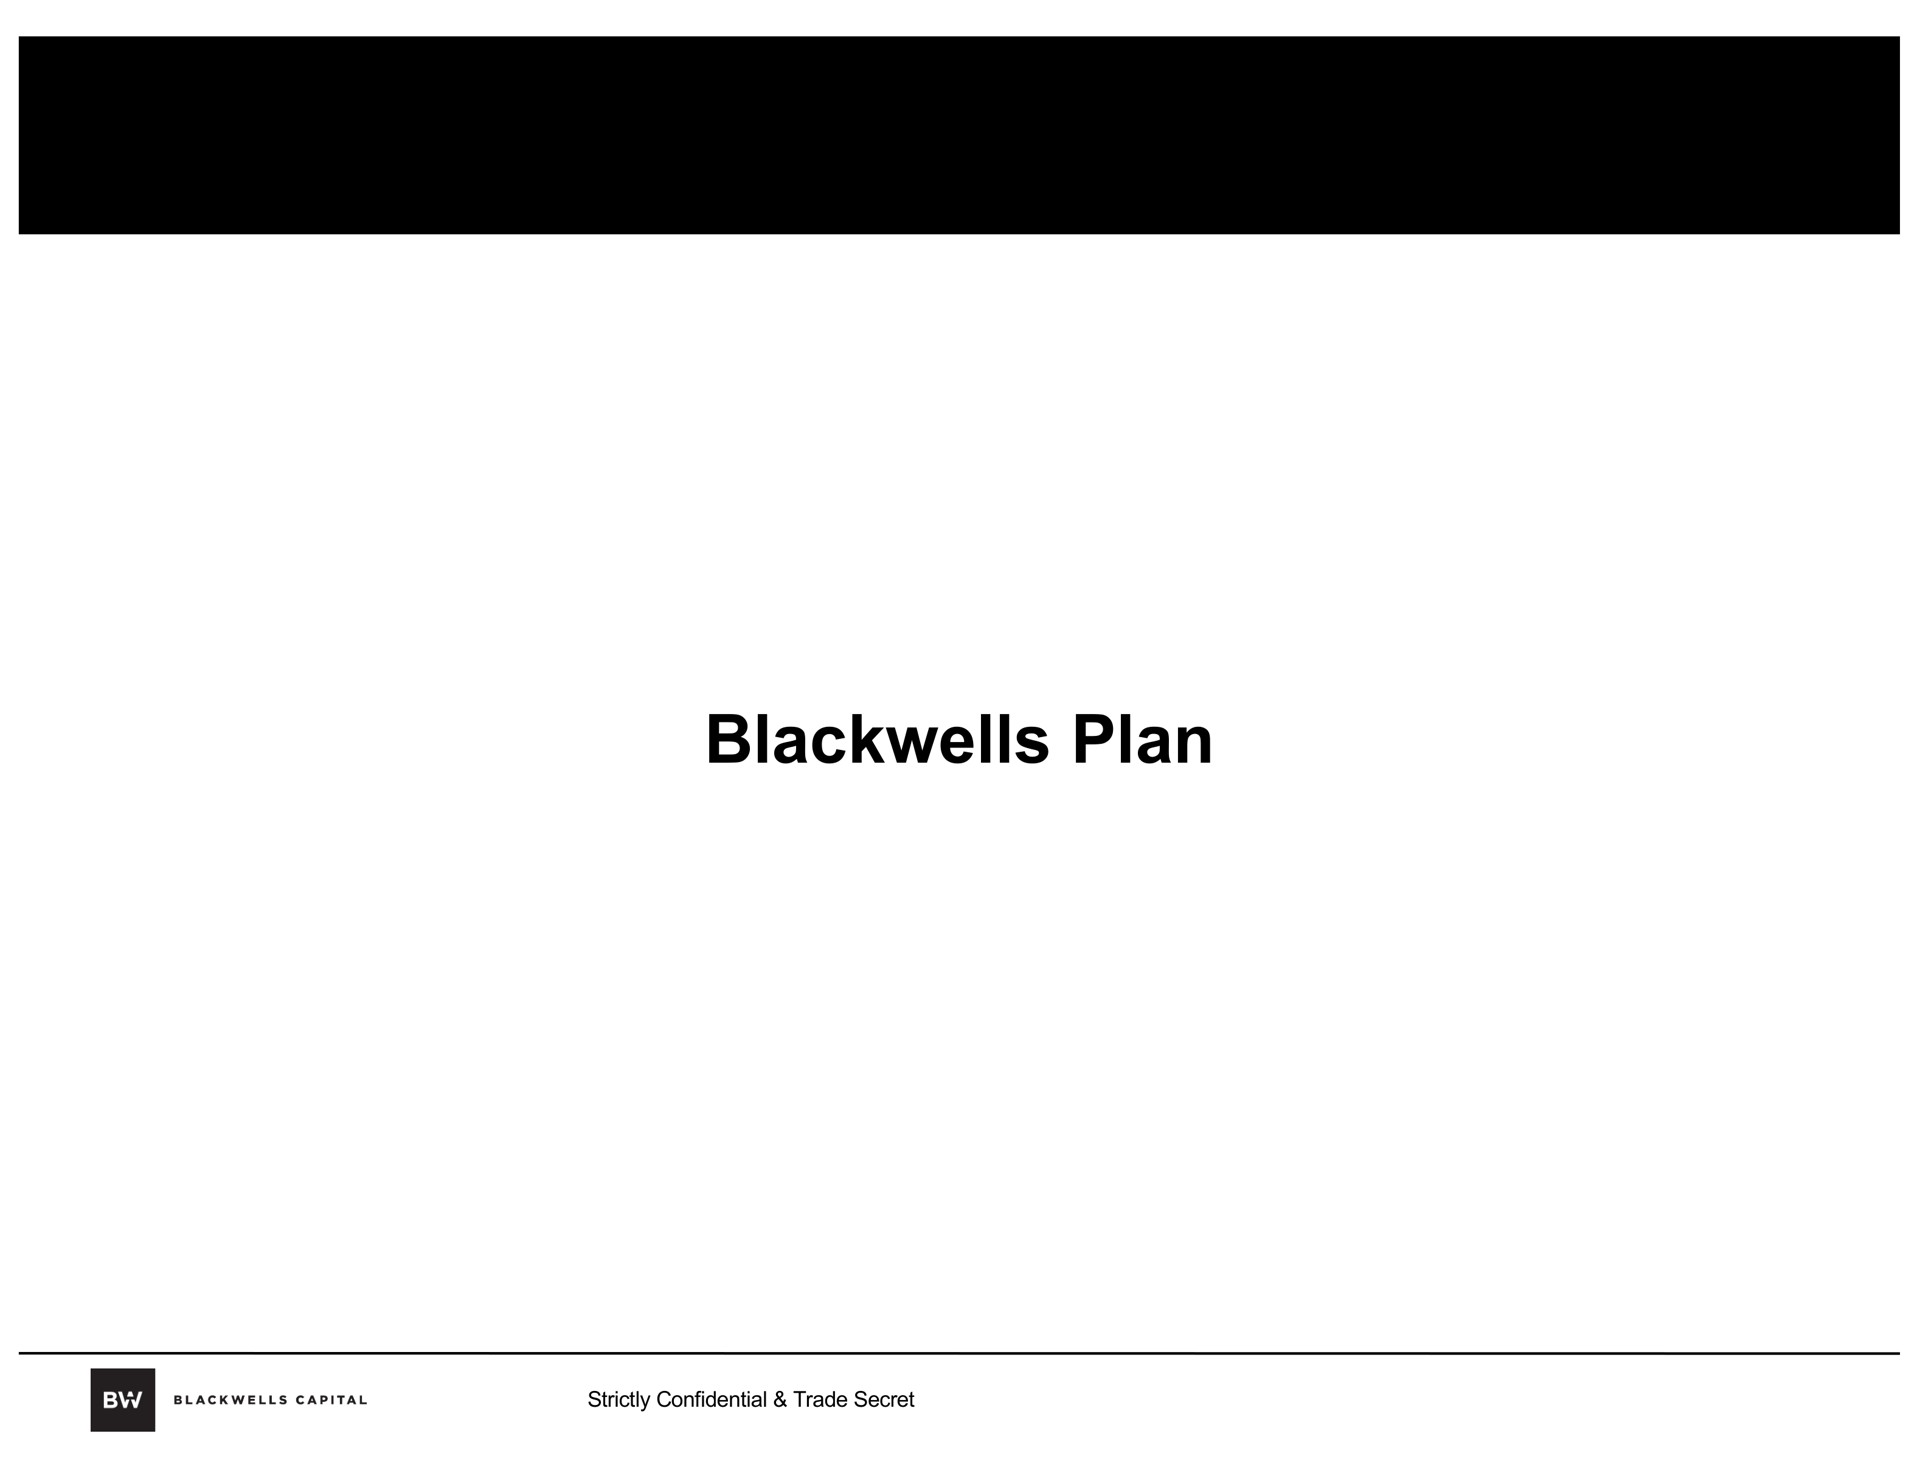 plan | Blackwells Capital